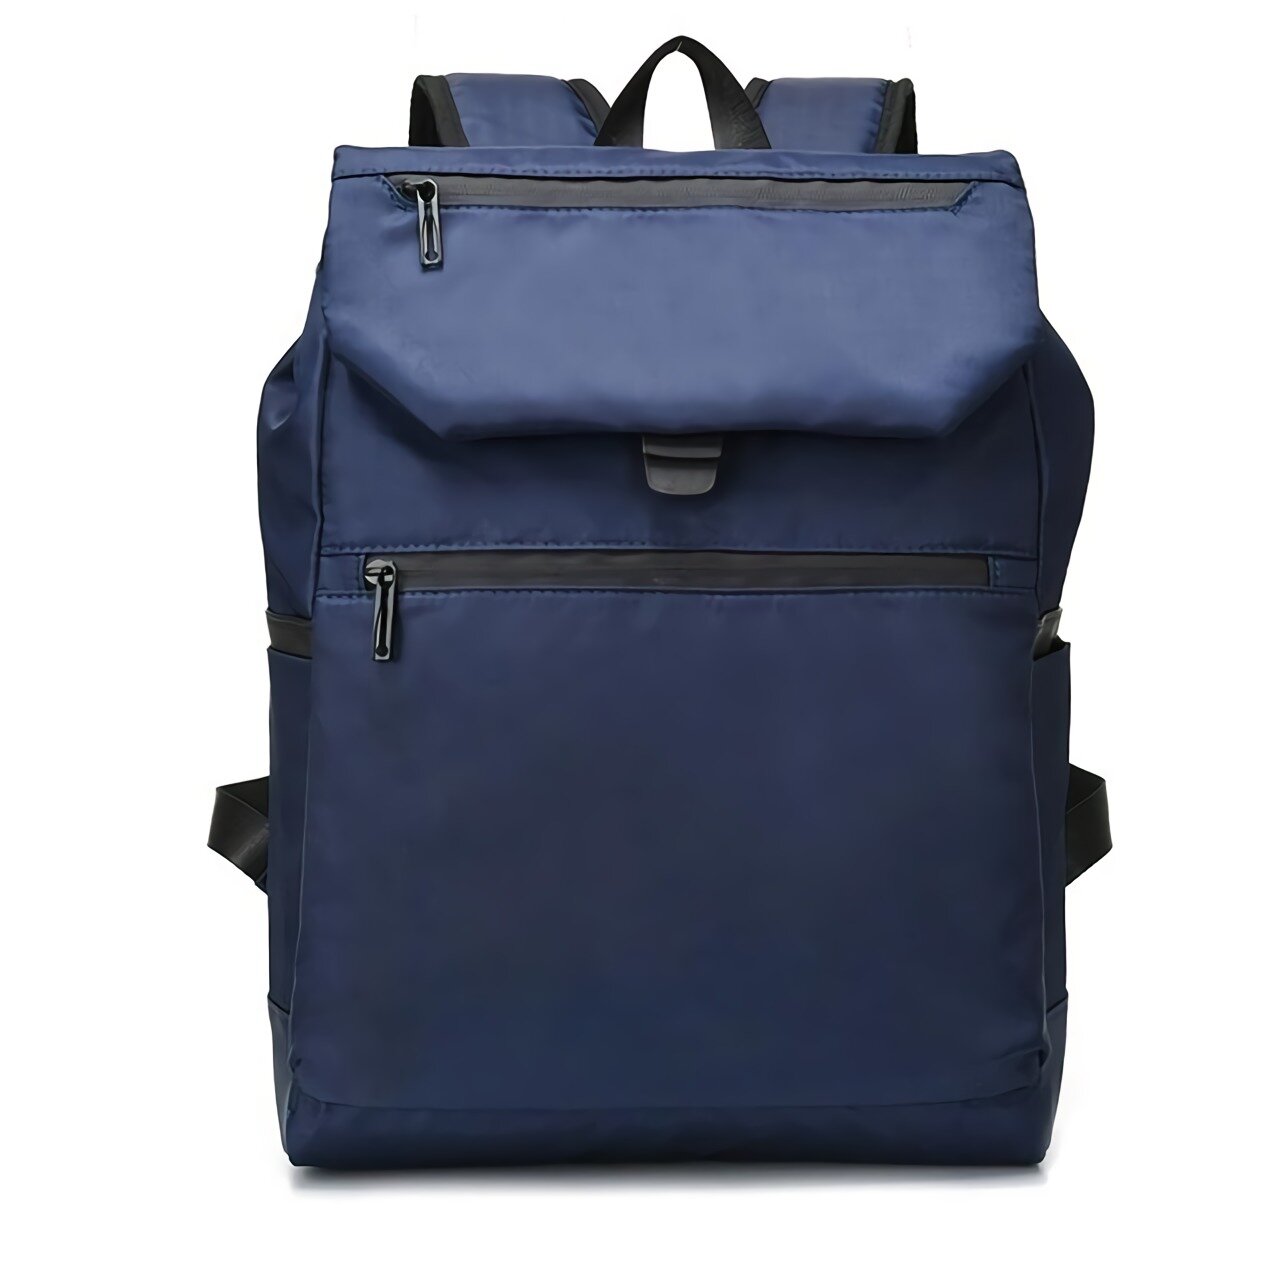 15 inch Laptop Backpack Waterproof Nylon Travel School Bagpack For Laptop Tablet Books